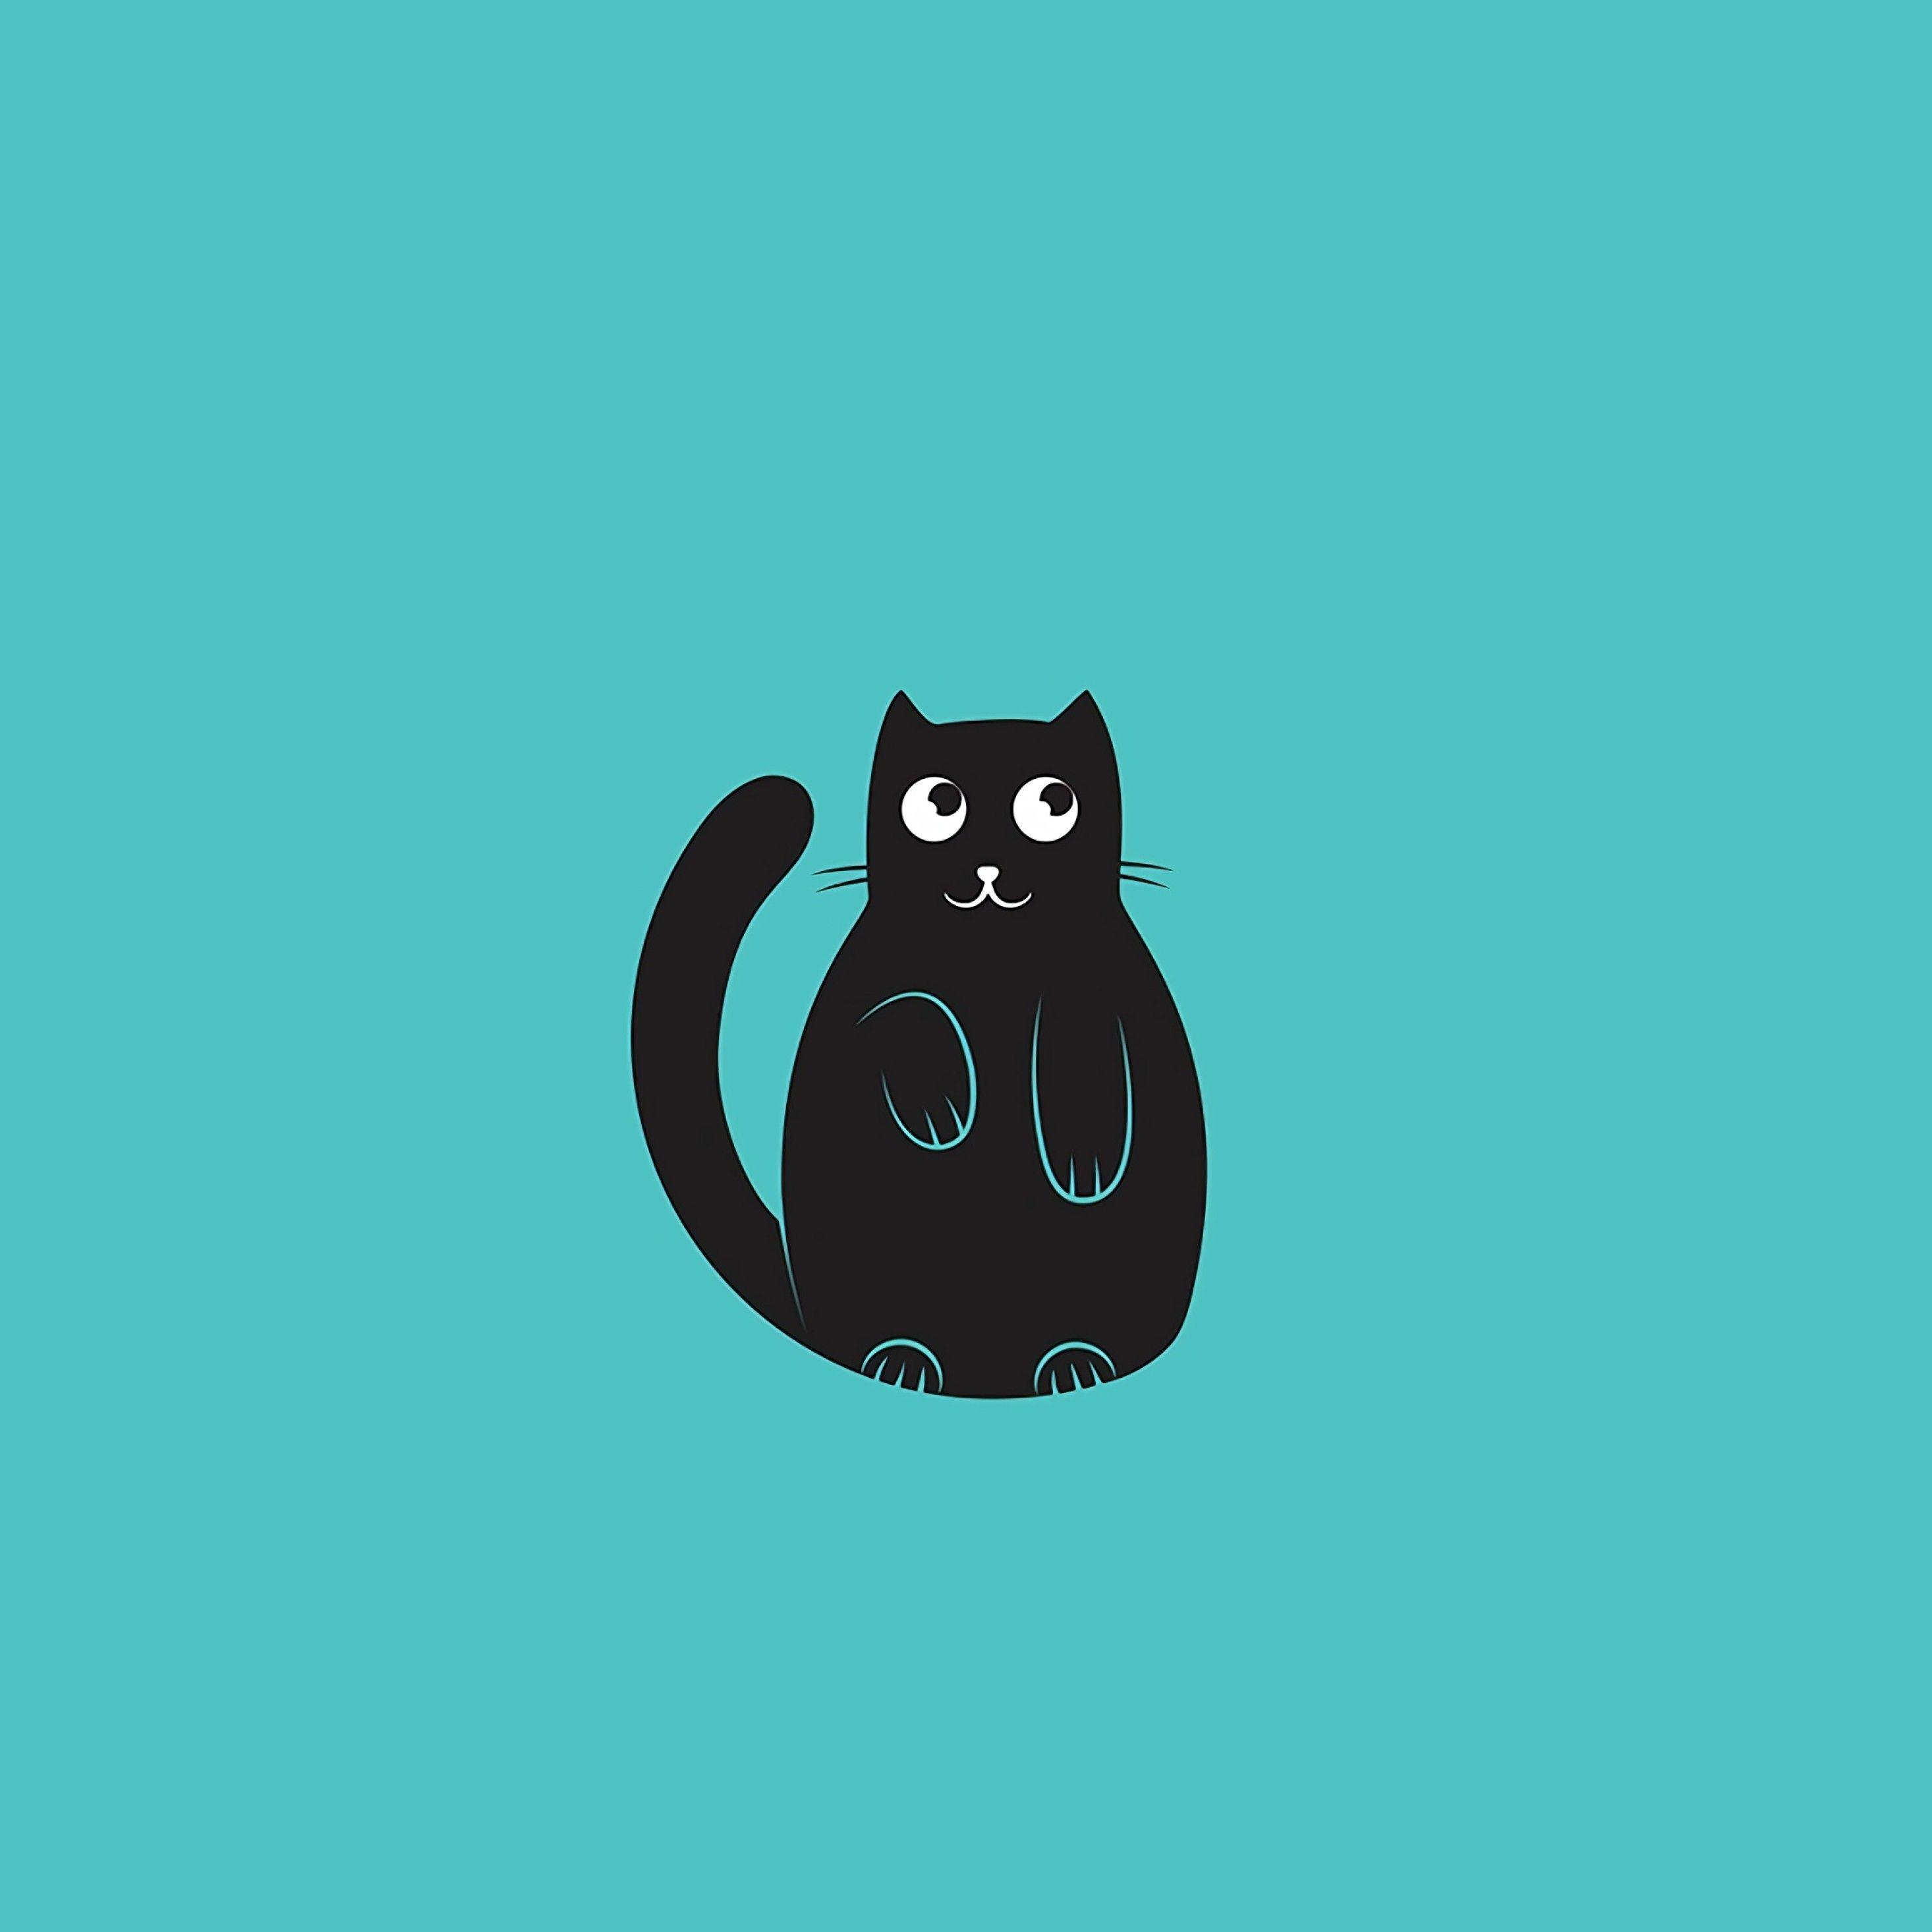 Minimalistic Cat Wallpapers - Top Free Minimalistic Cat Backgrounds ...